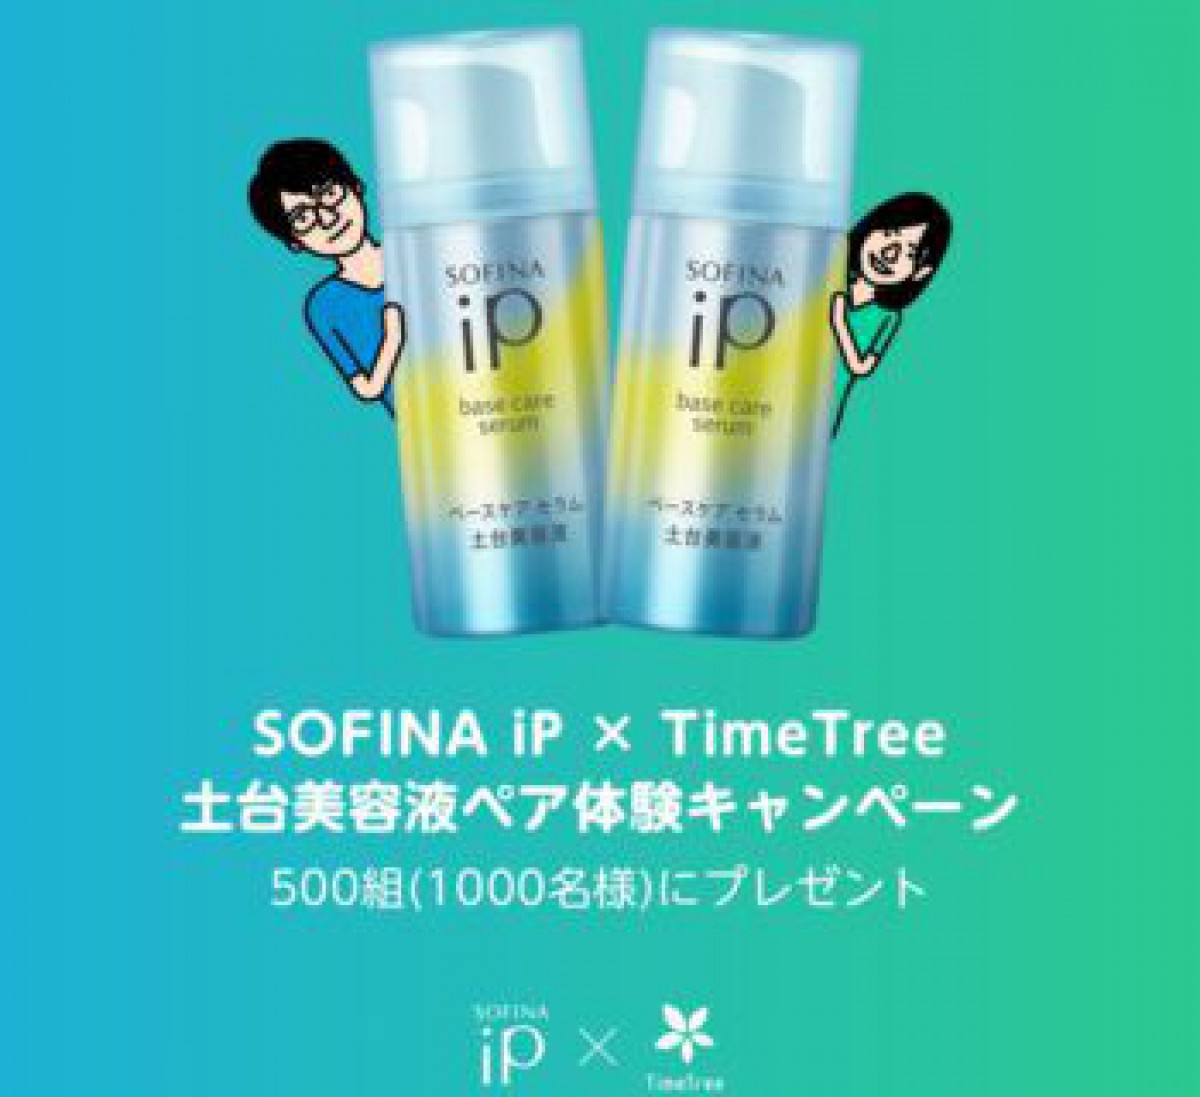 SOFINA iP 土台美容液ミニサイズが当たるキャンペーン！